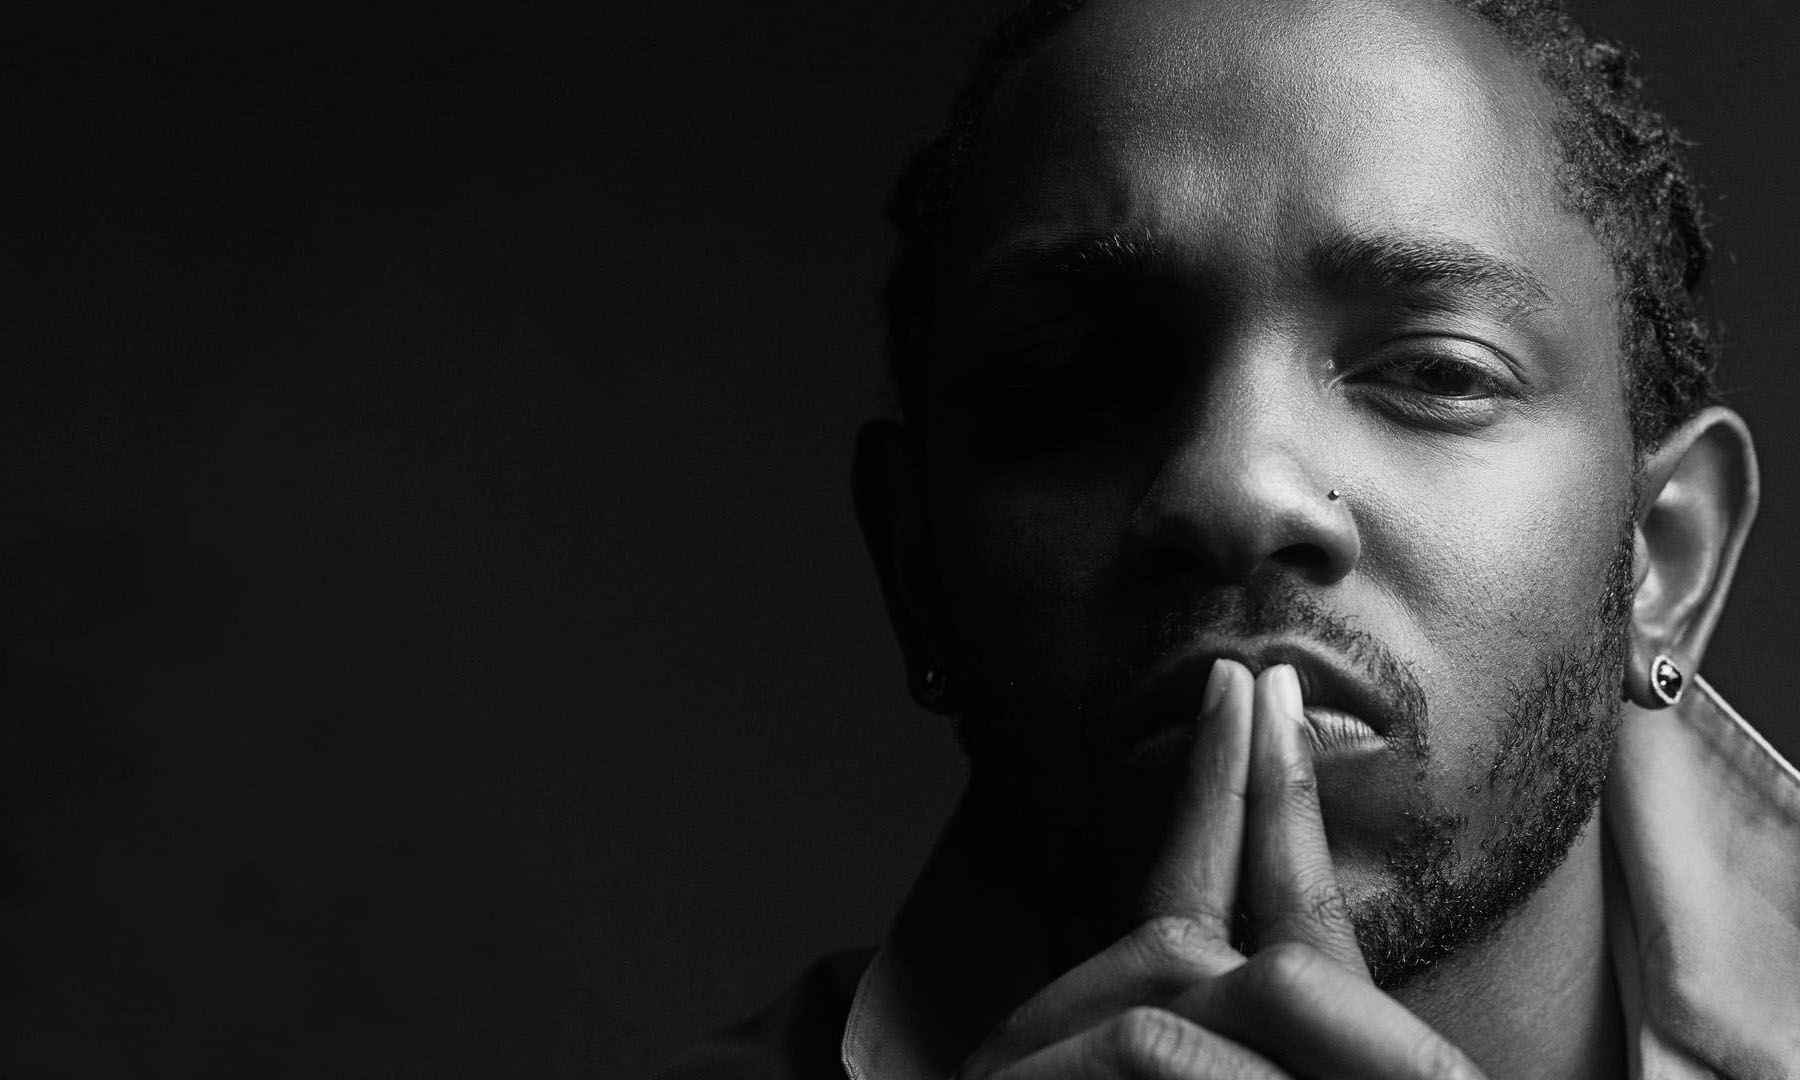 Kendrick Lamar 将 “FEAR.” 选为生涯最佳 Verse